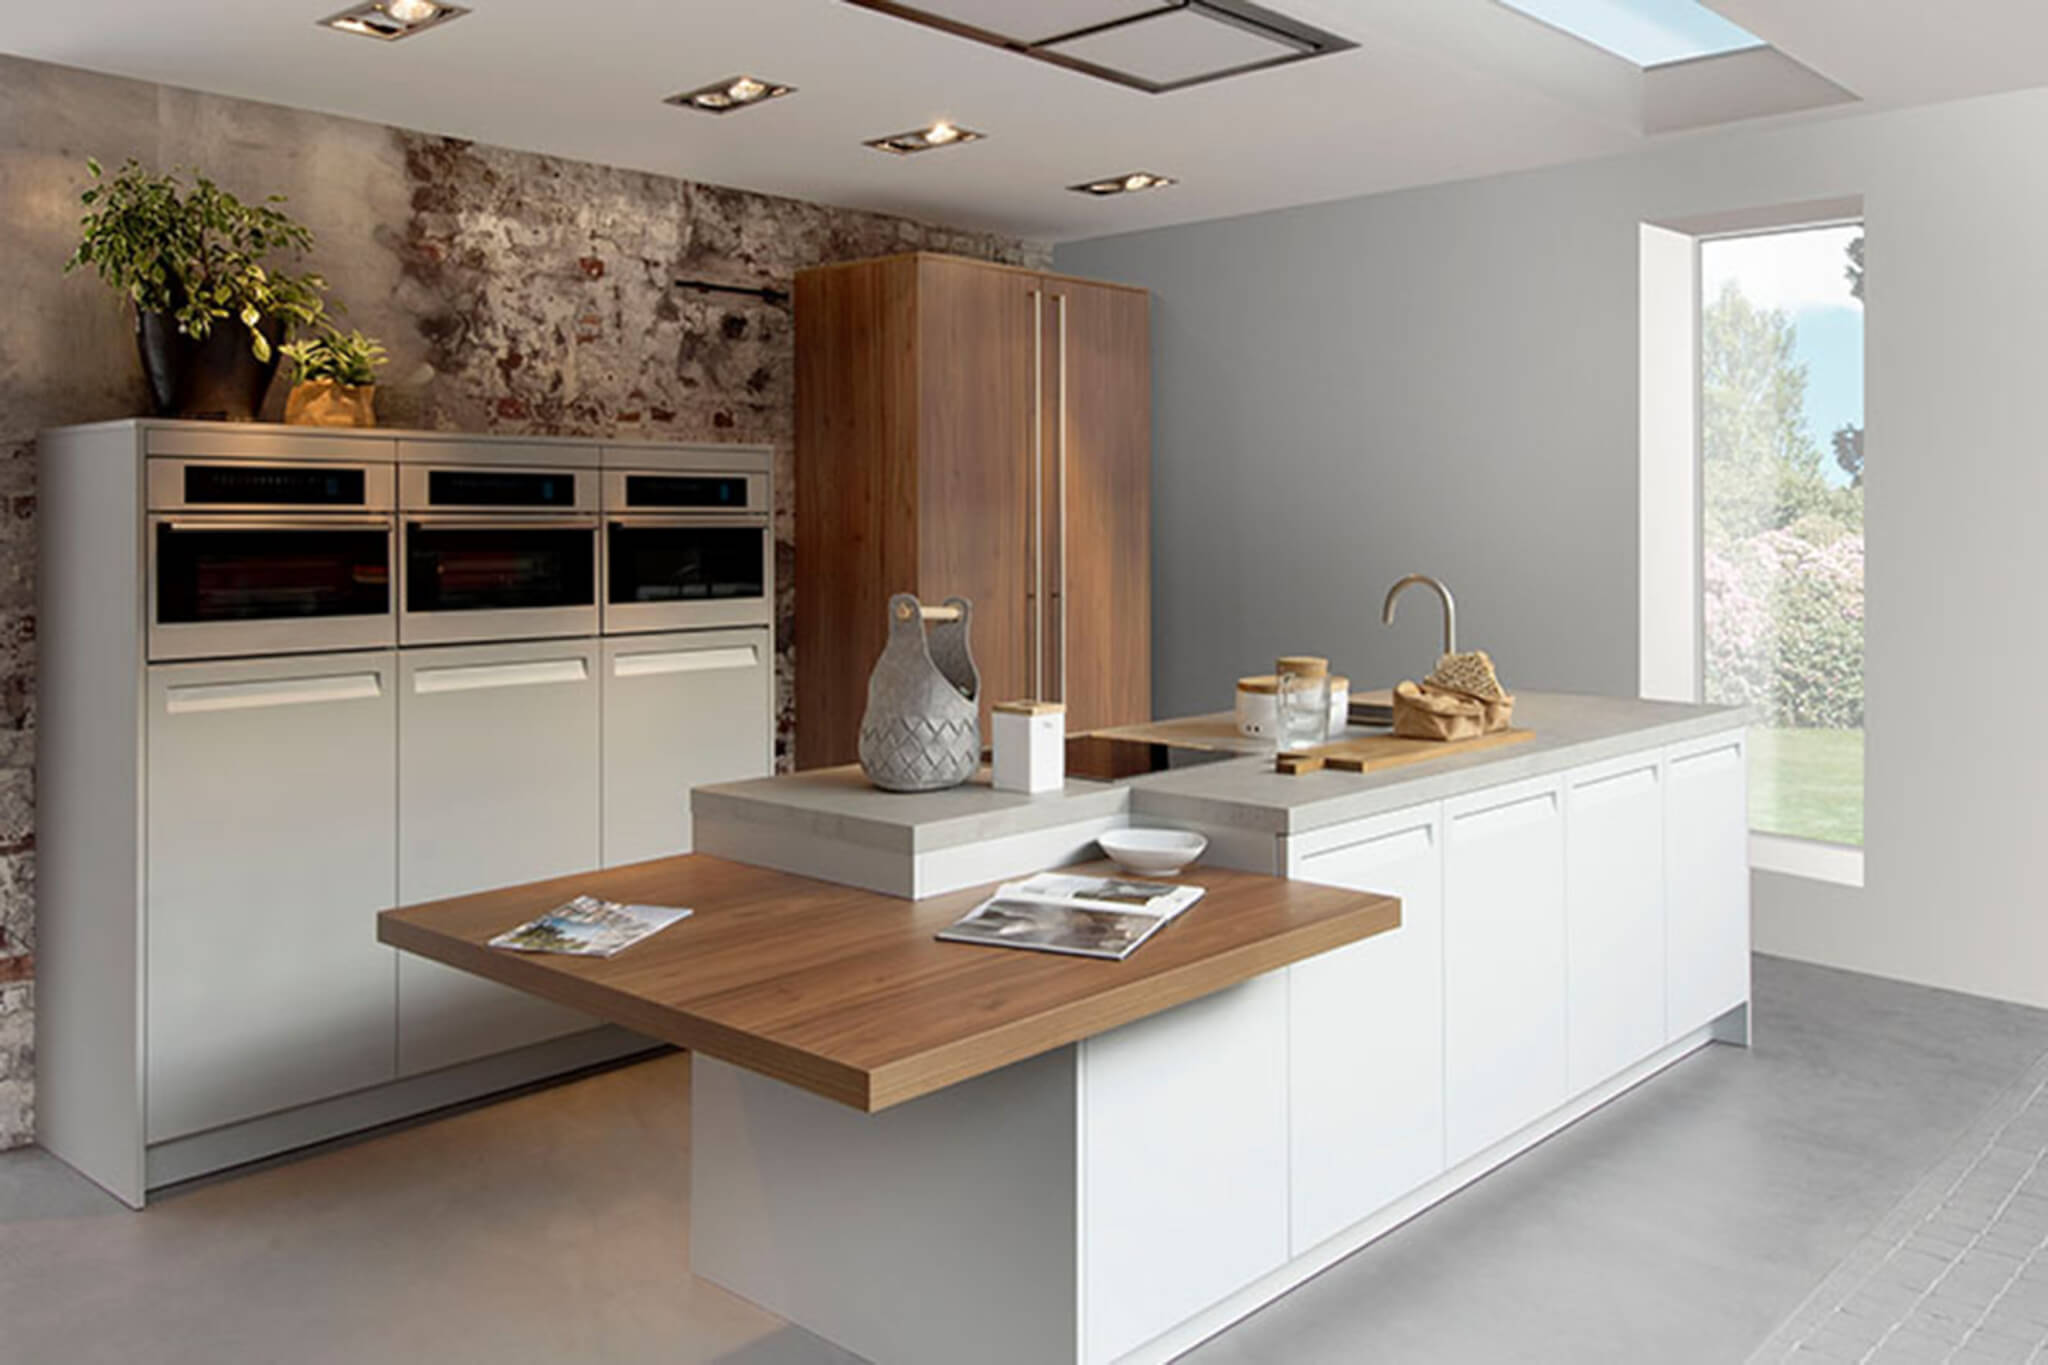 Kookhuis selectie kookeiland in moderne keuken